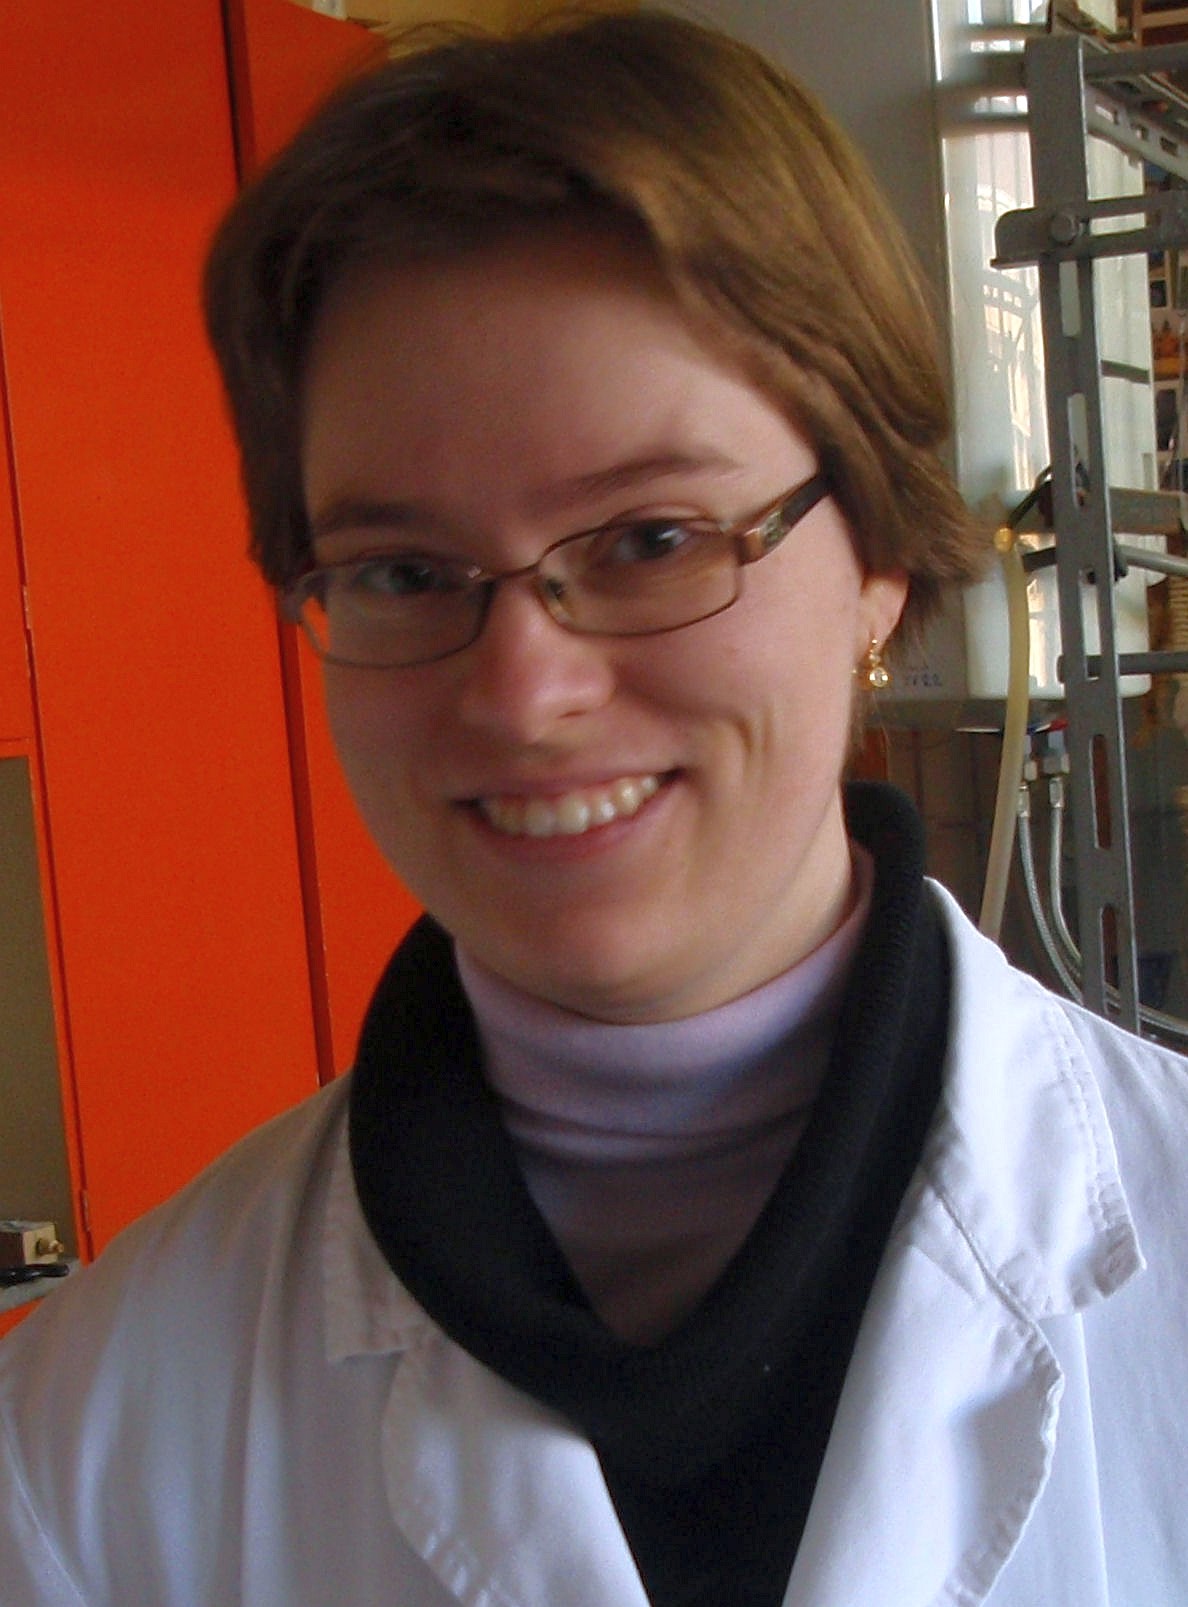 Dr. Marina Sekutor in her lab coat